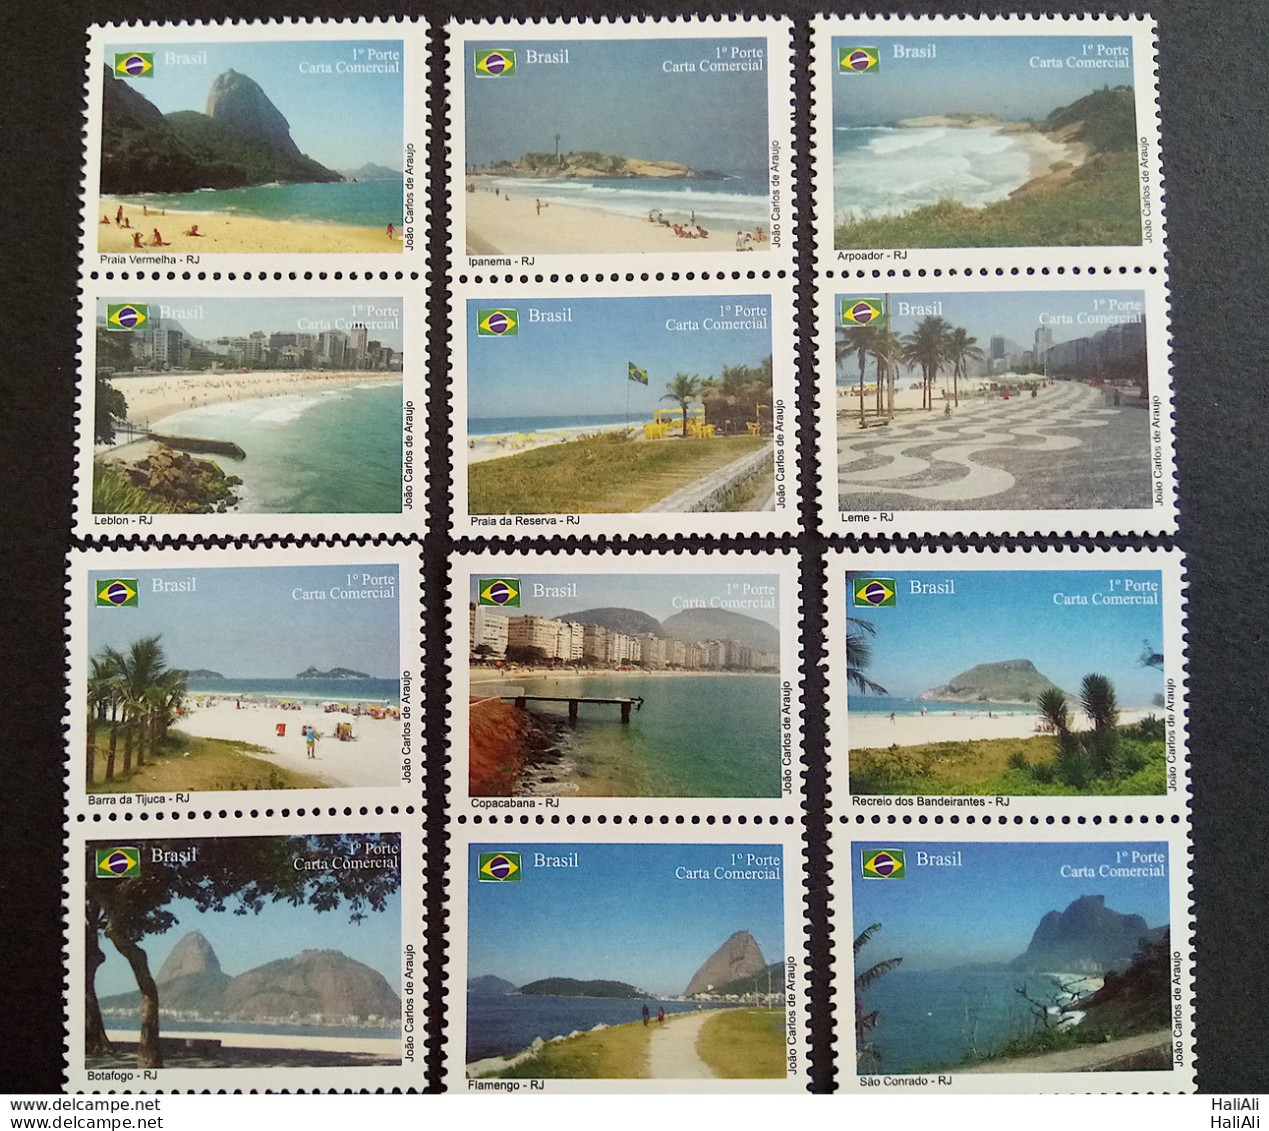 C 2927 Brazil Depersonalized Stamp Tourism Rio De Janeiro Cariocas Beach 2009 Complete Series - Gepersonaliseerde Postzegels